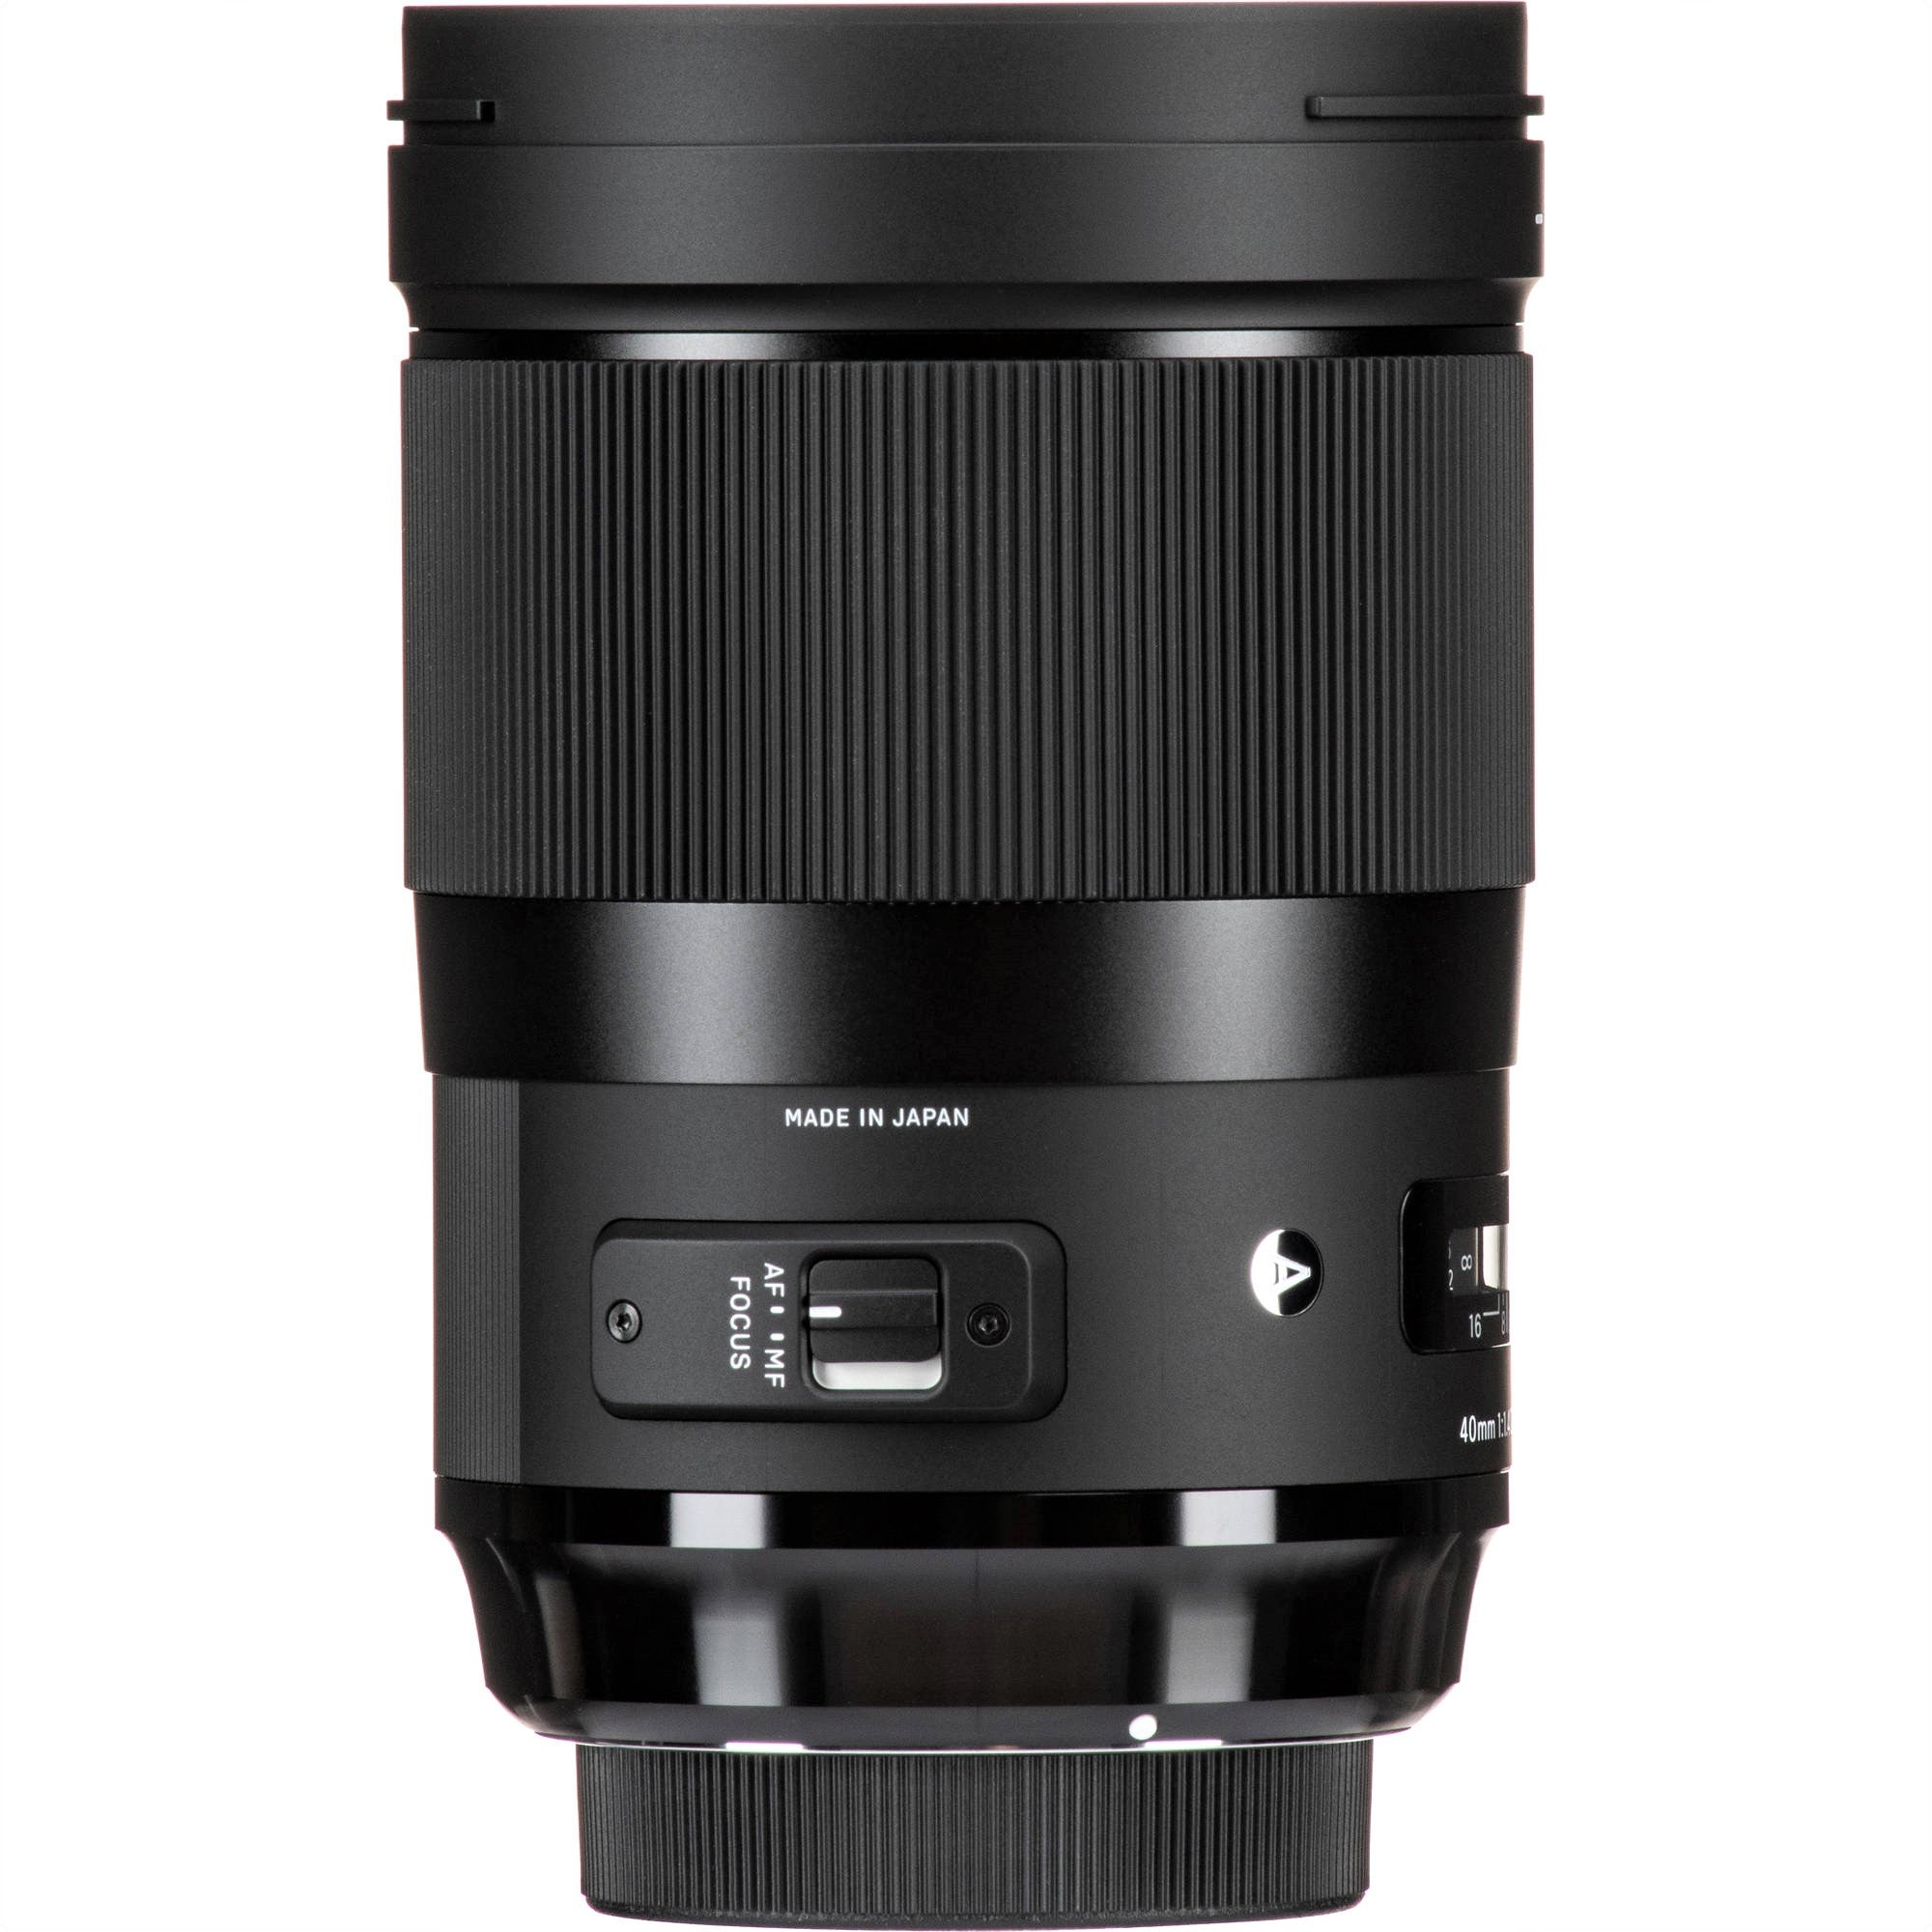 Sigma 40mm F1.4 DG HSM Art Lens for Sigma SA